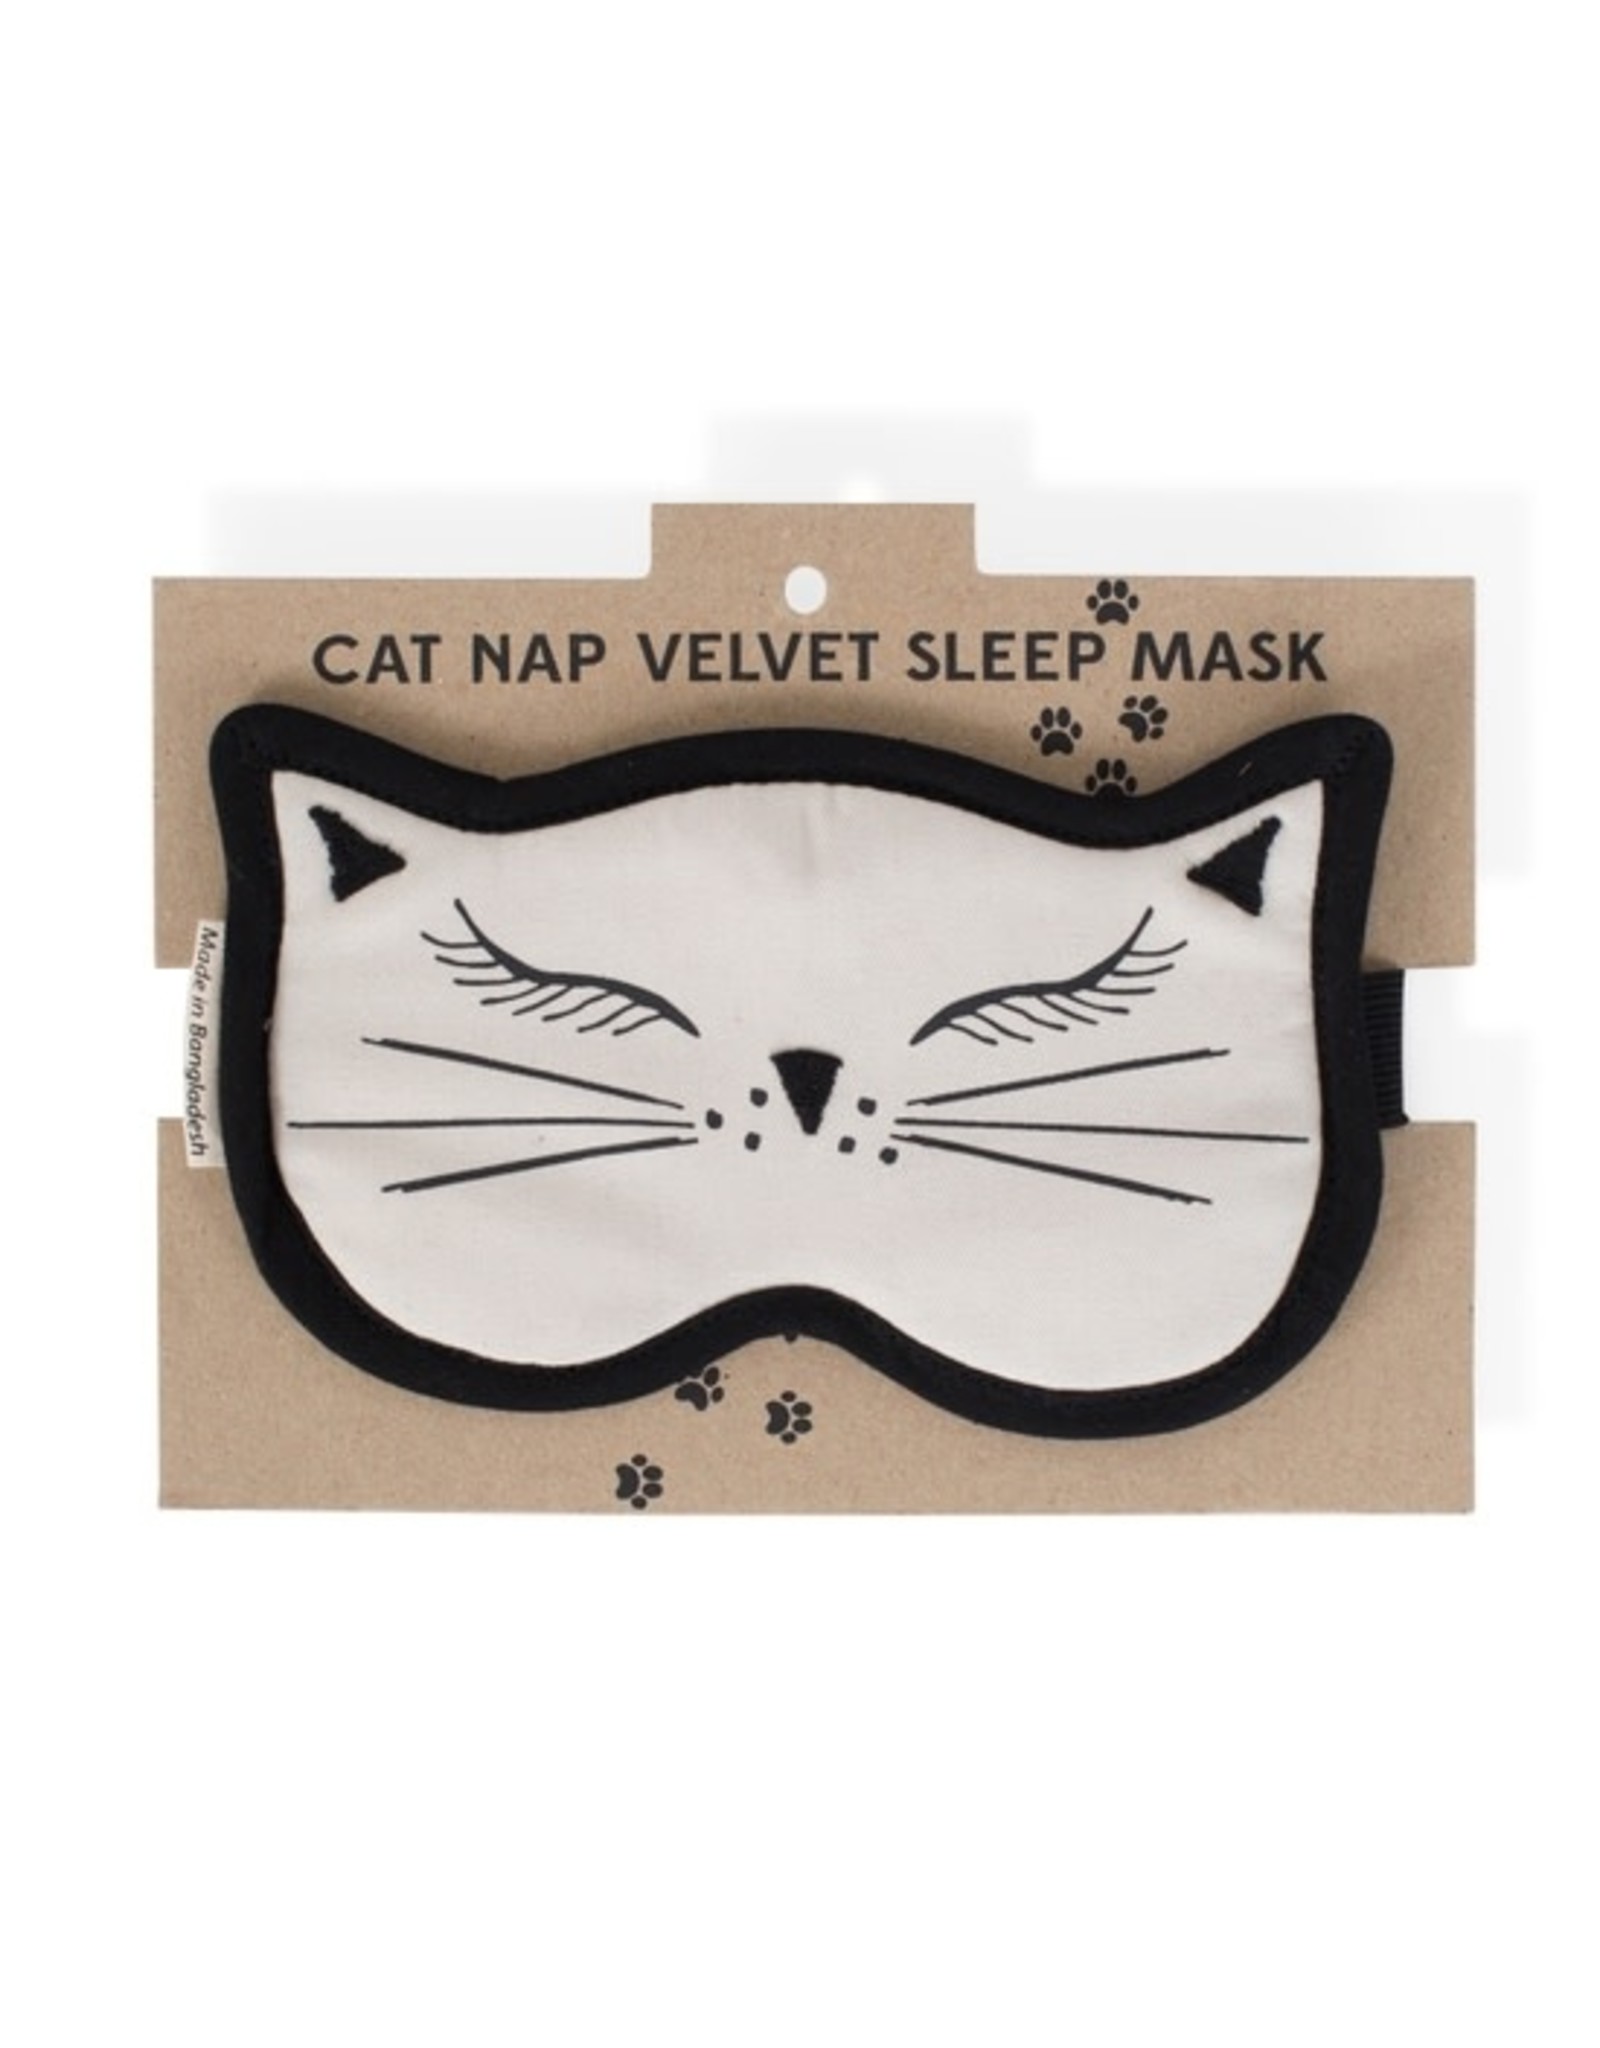 Bangladesh Cat Nap Velvet Sleep Mask, Bangladesh